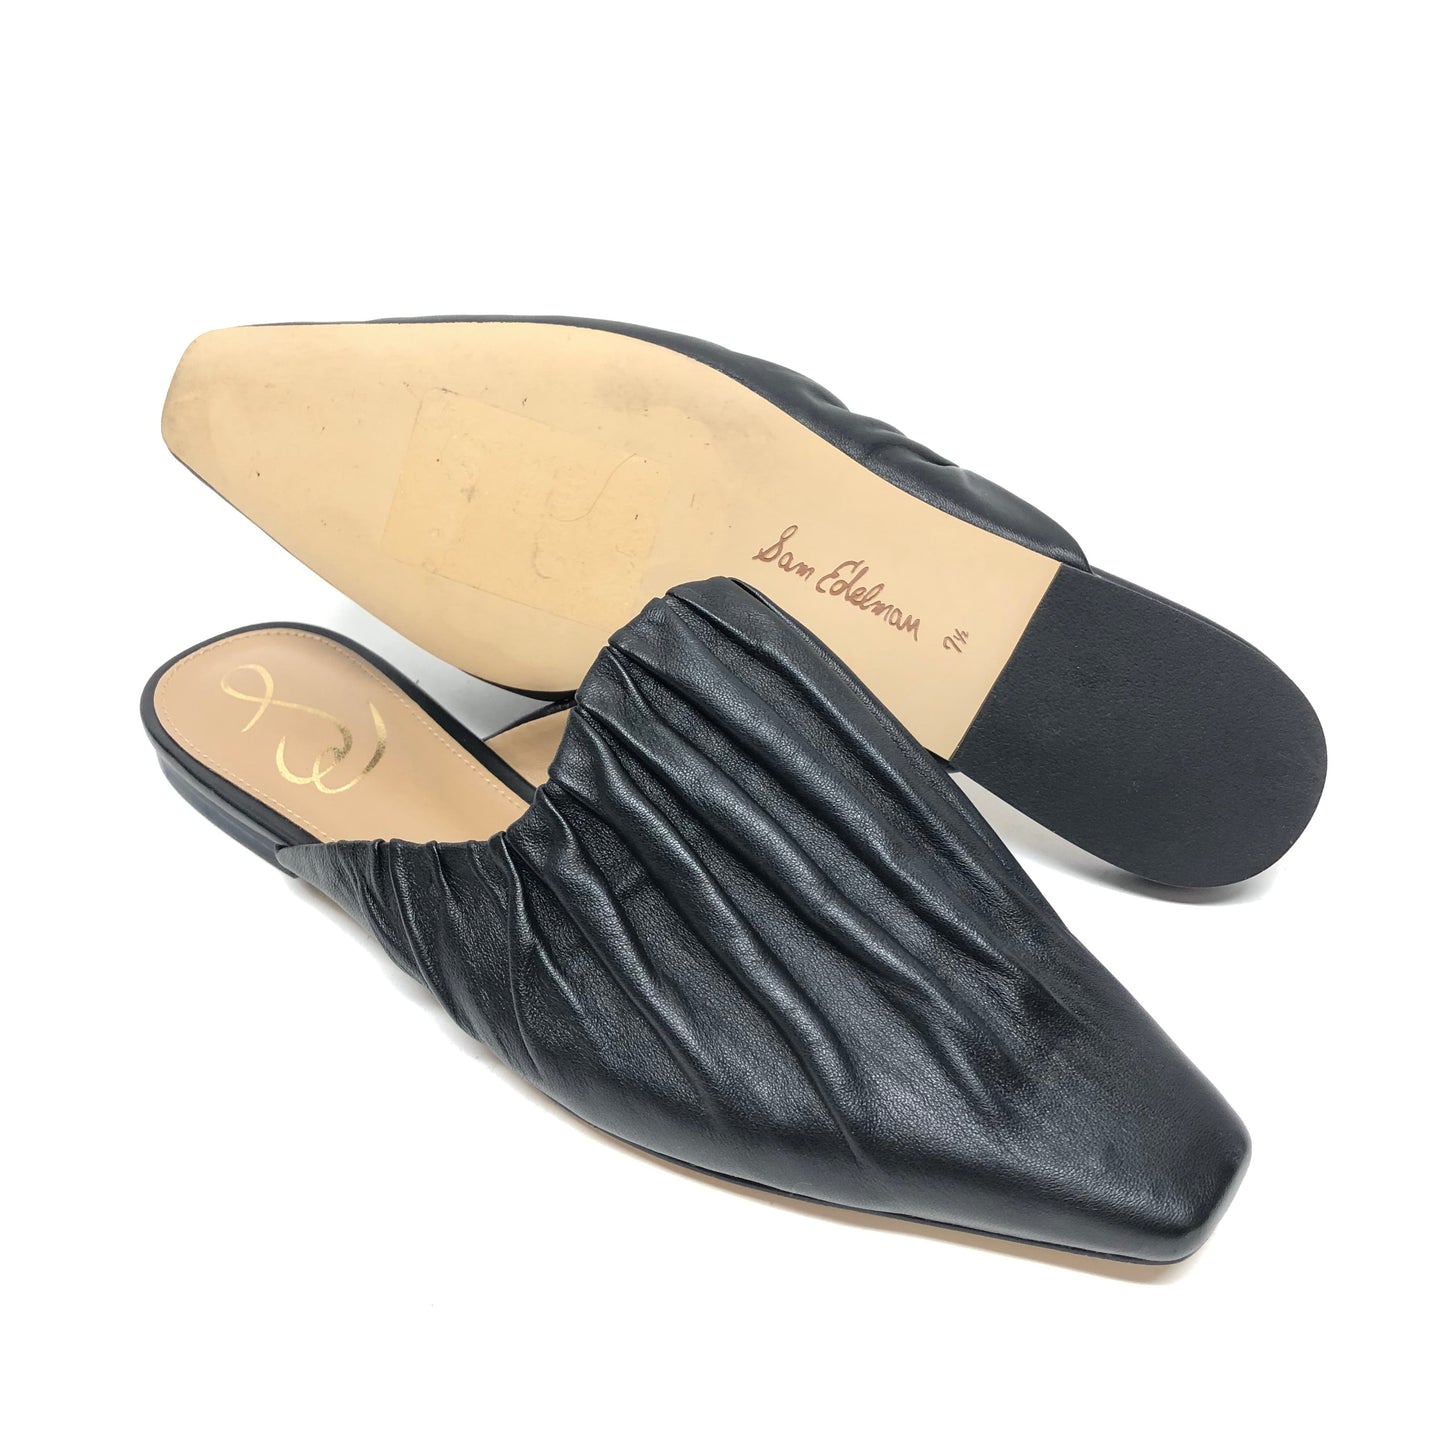 Black Shoes Flats Sam Edelman, Size 7.5